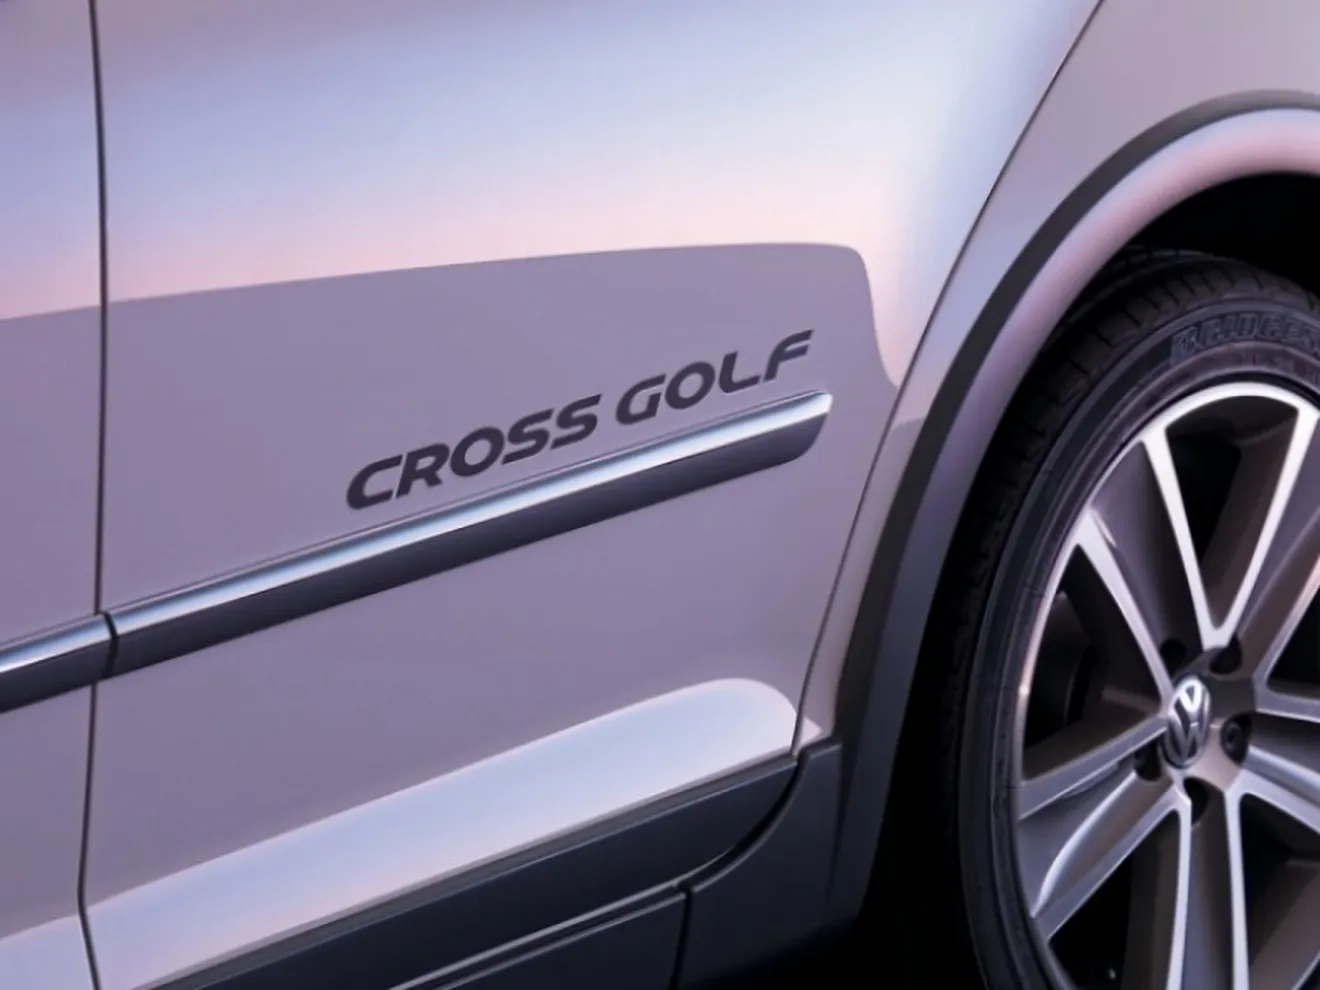 Nuevo Volkswagen Cross Golf. El todovolumen.